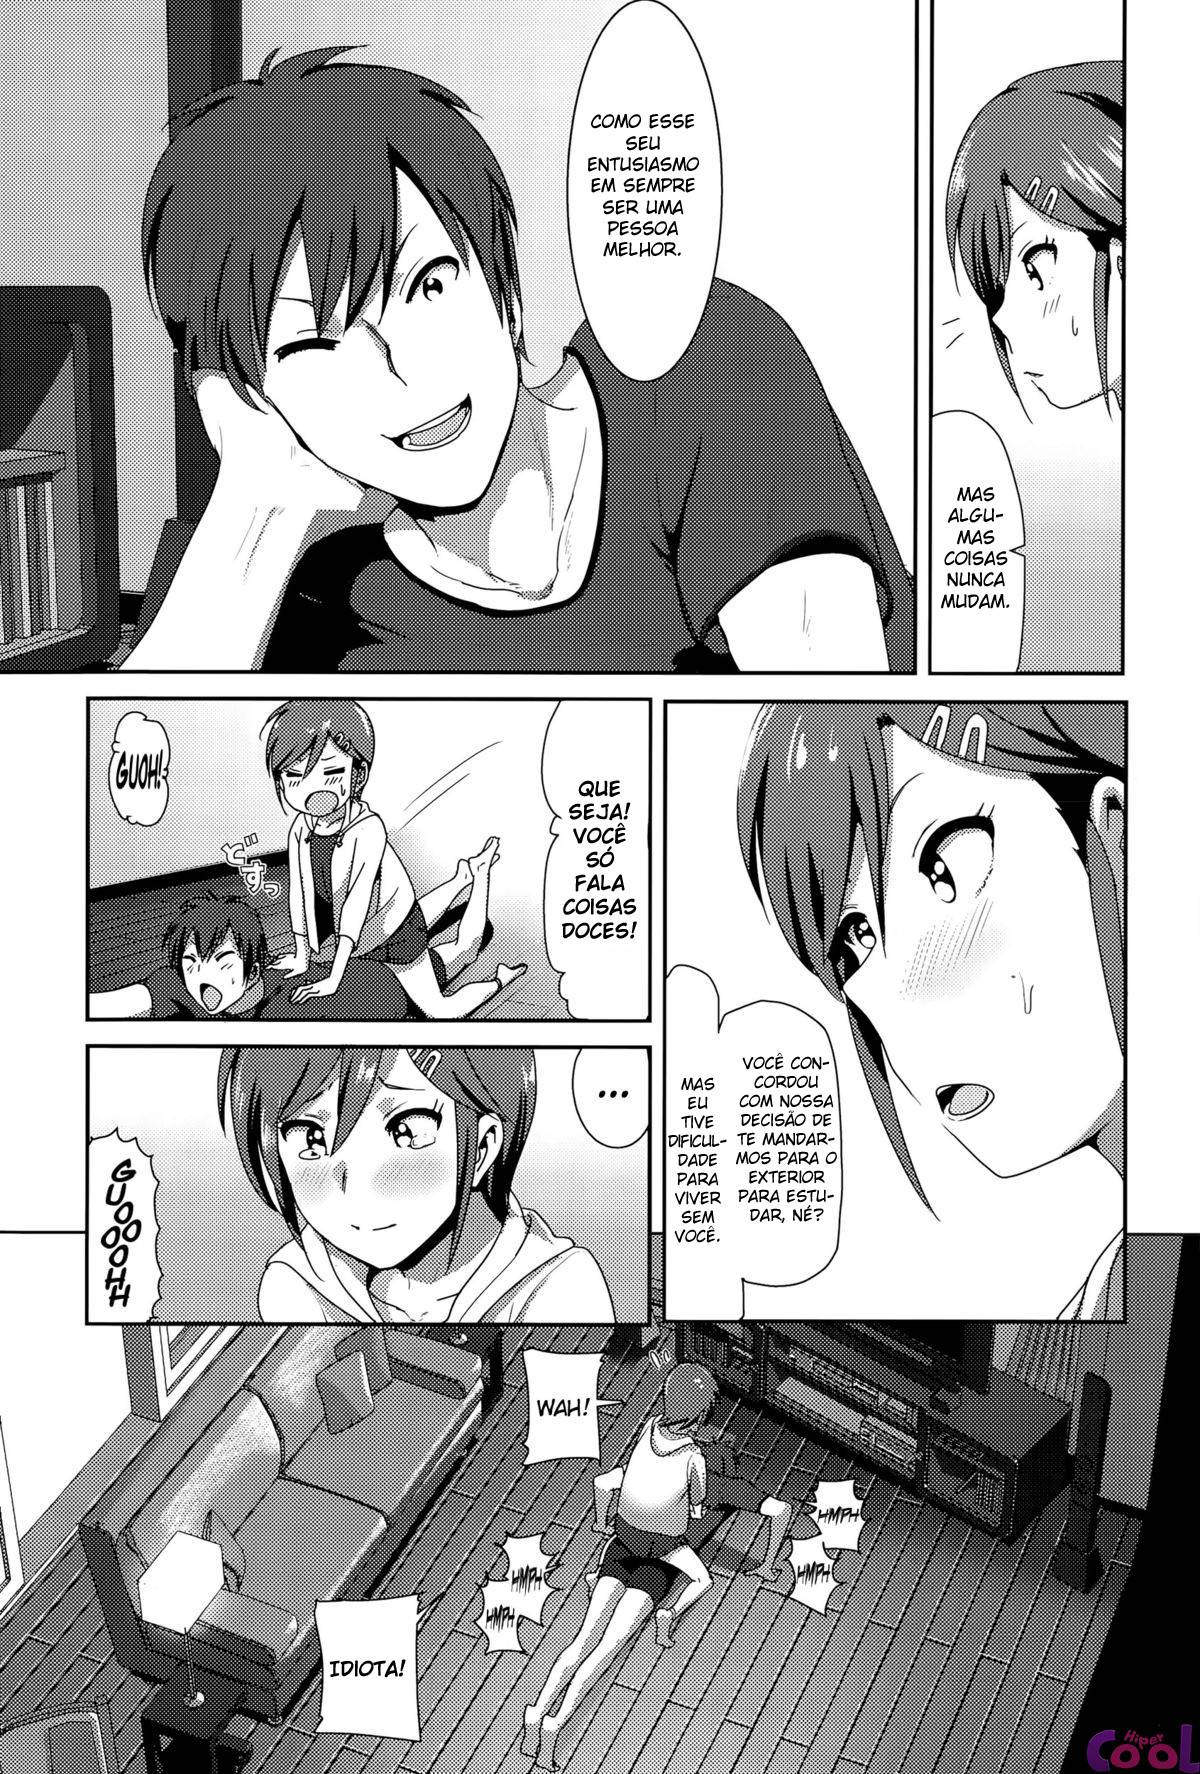 ne_-niichan-chapter-01-page-03.jpg